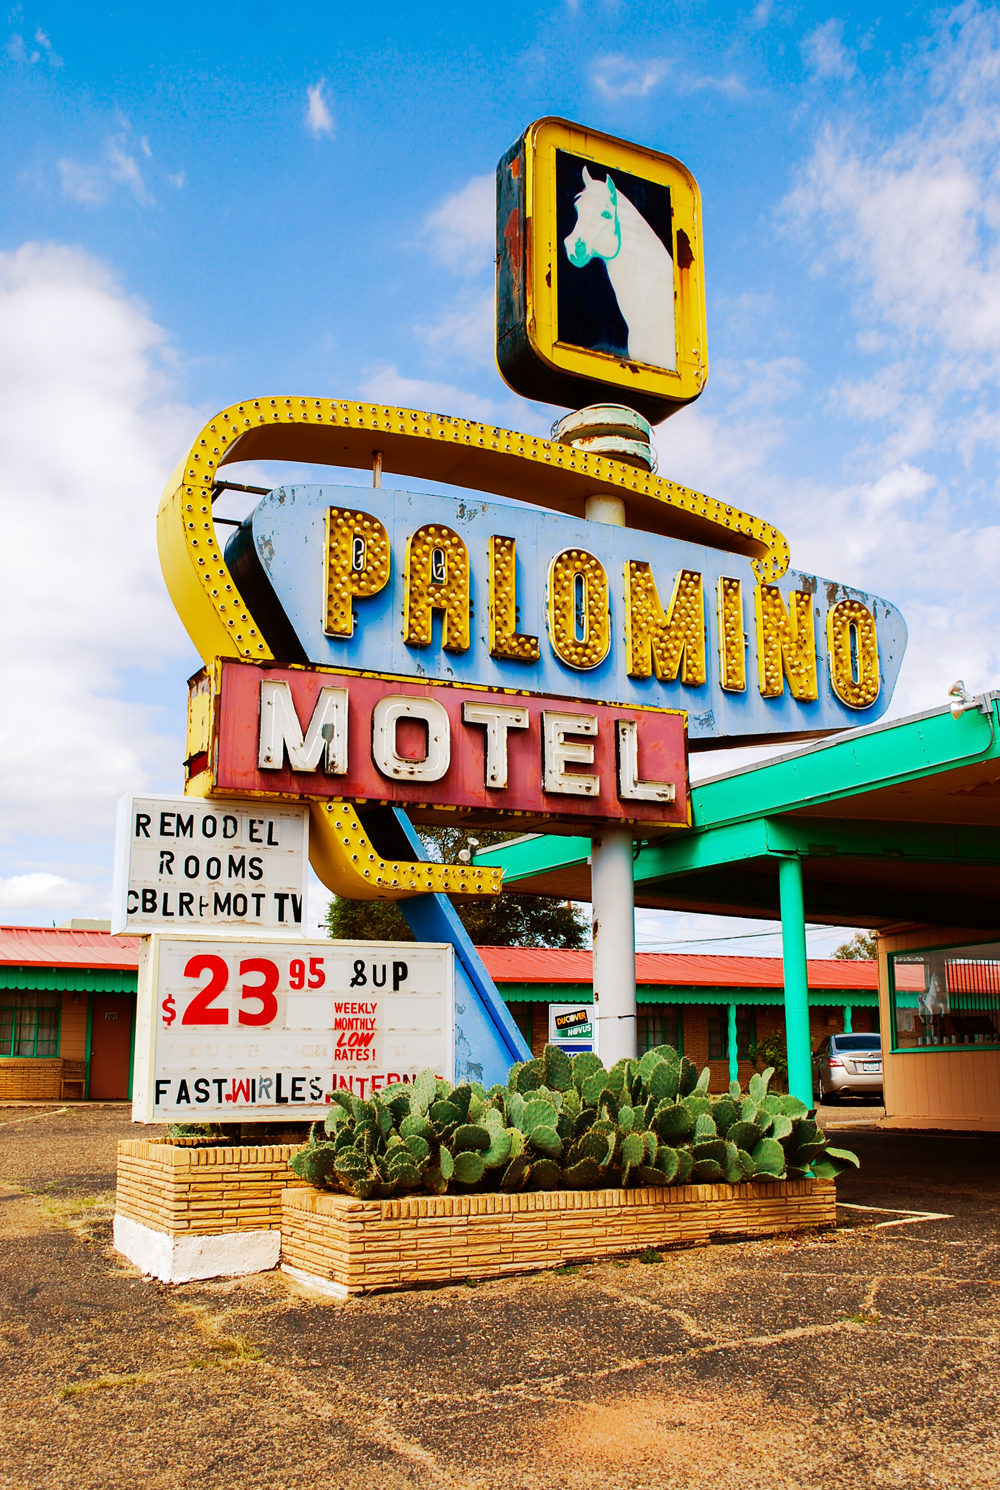 photograph of the Palomino Motel sign in Tucumcari, New Mexico